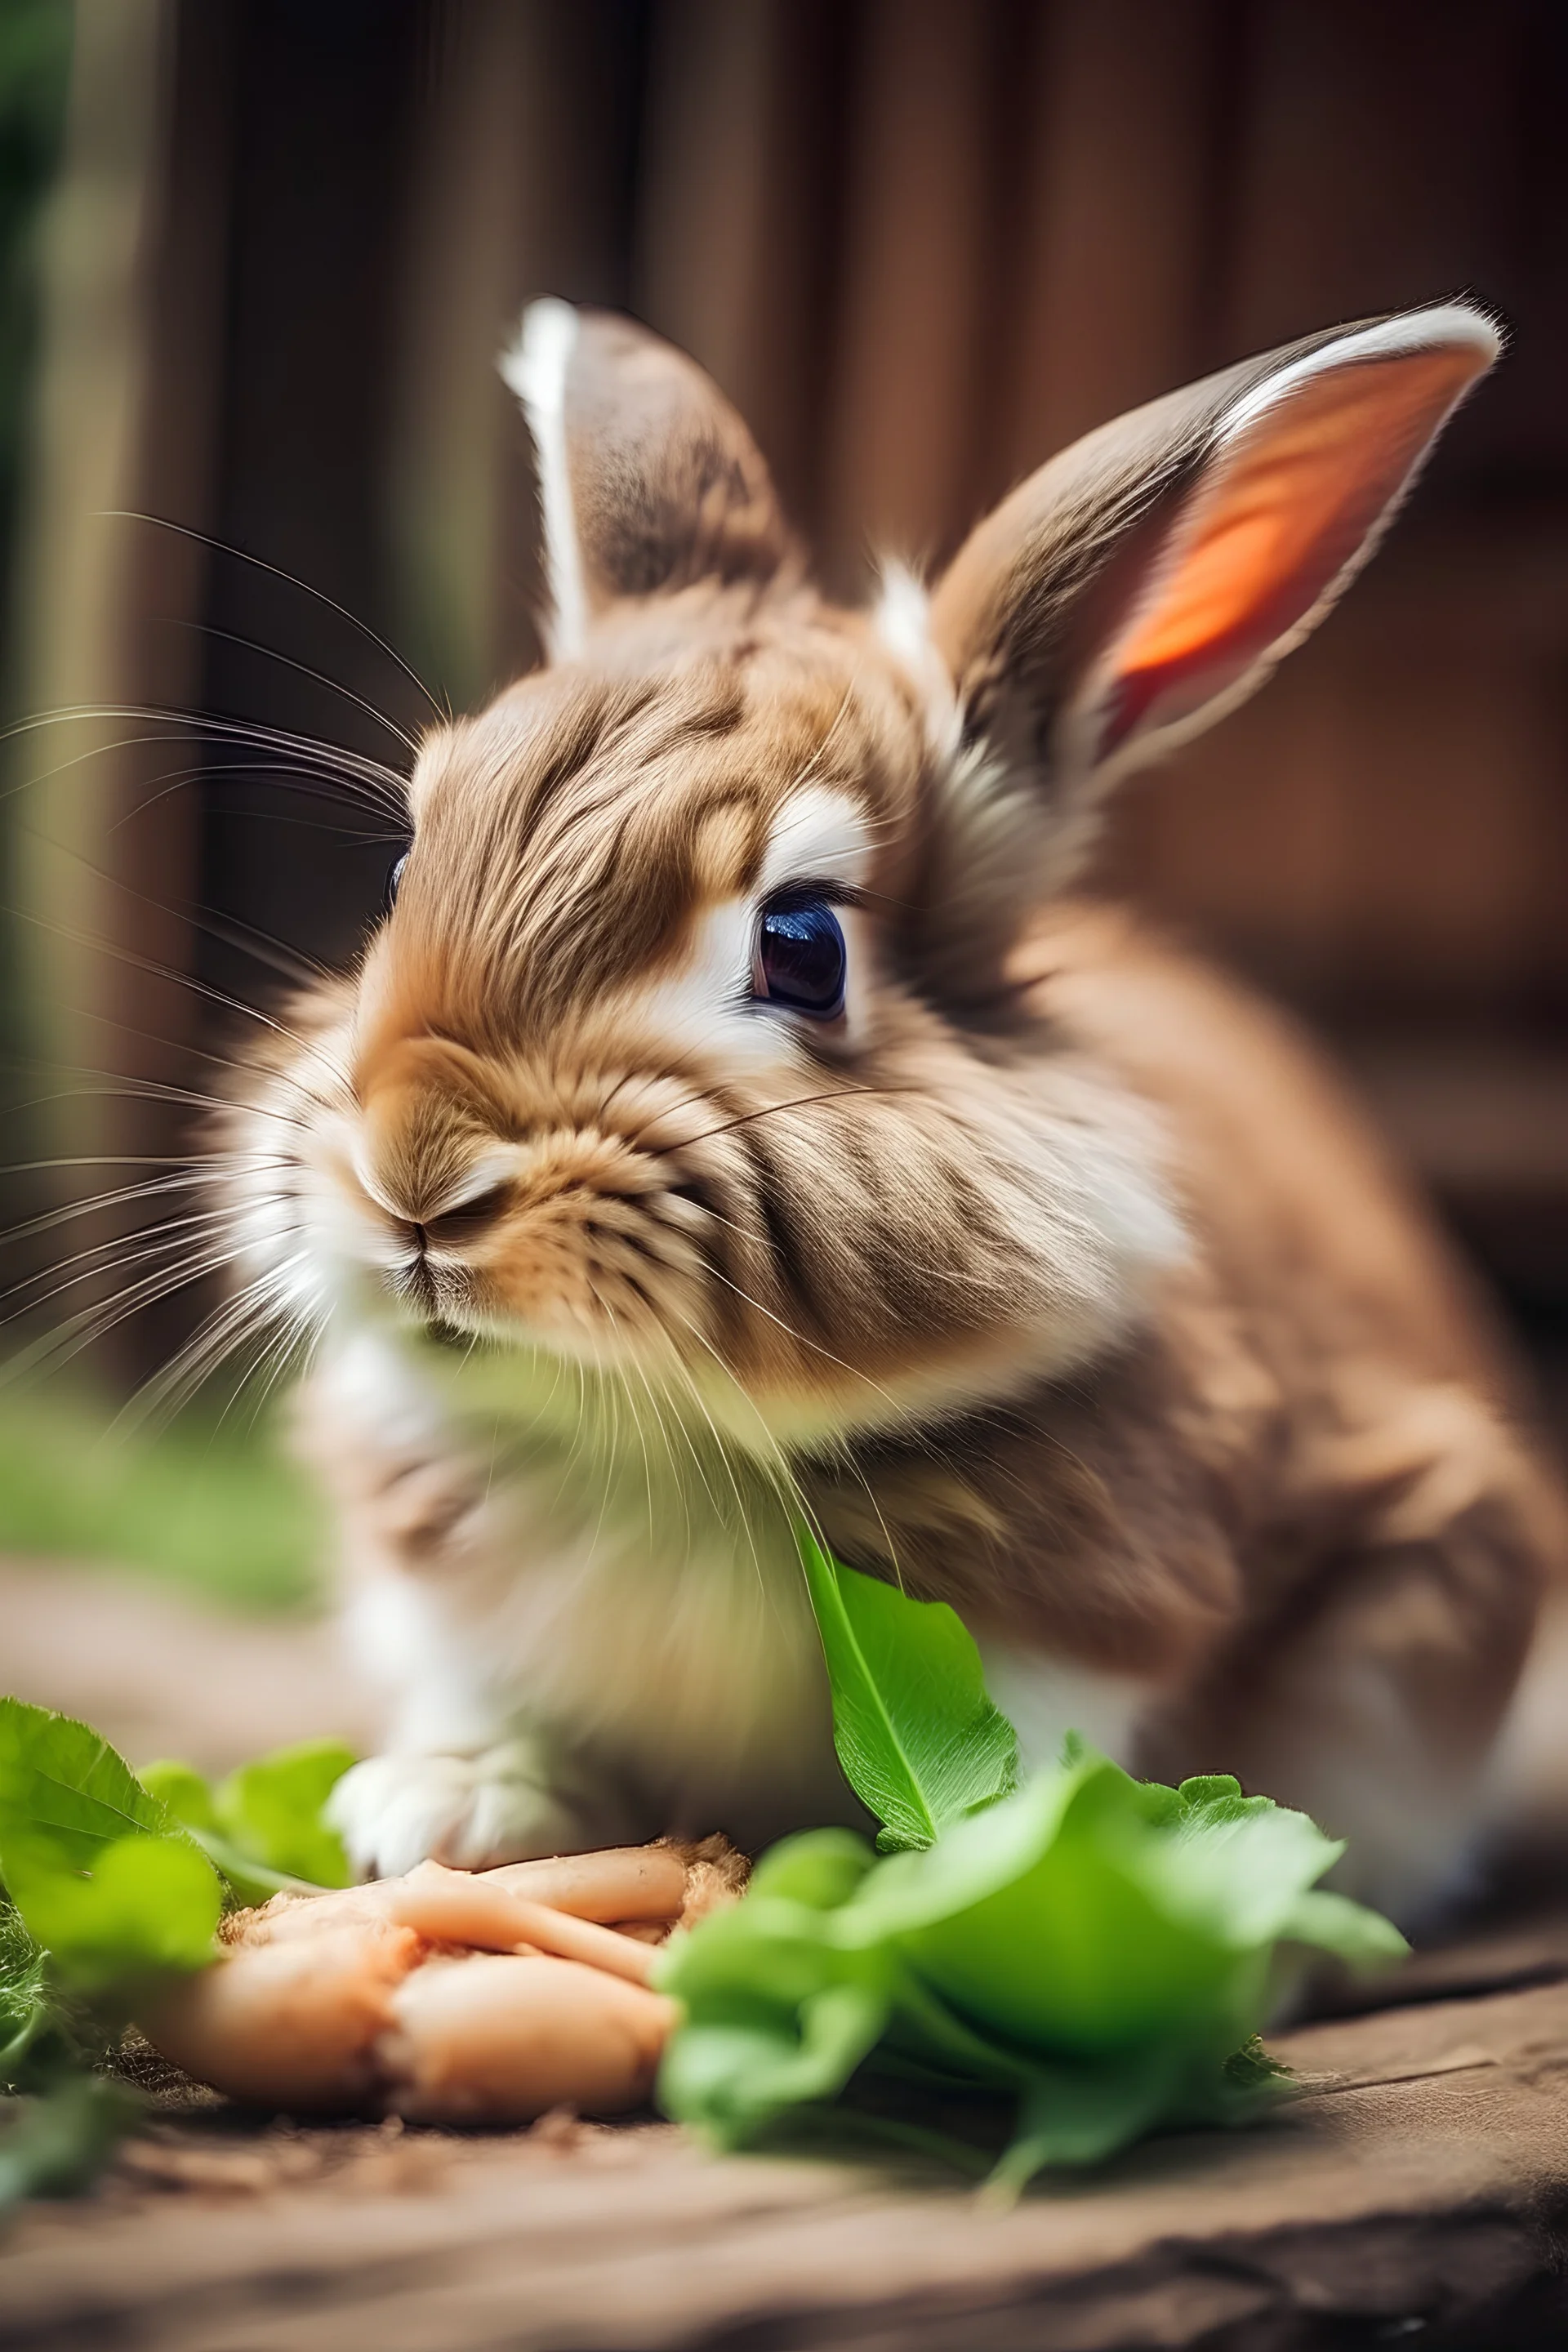 a cute bunny eating